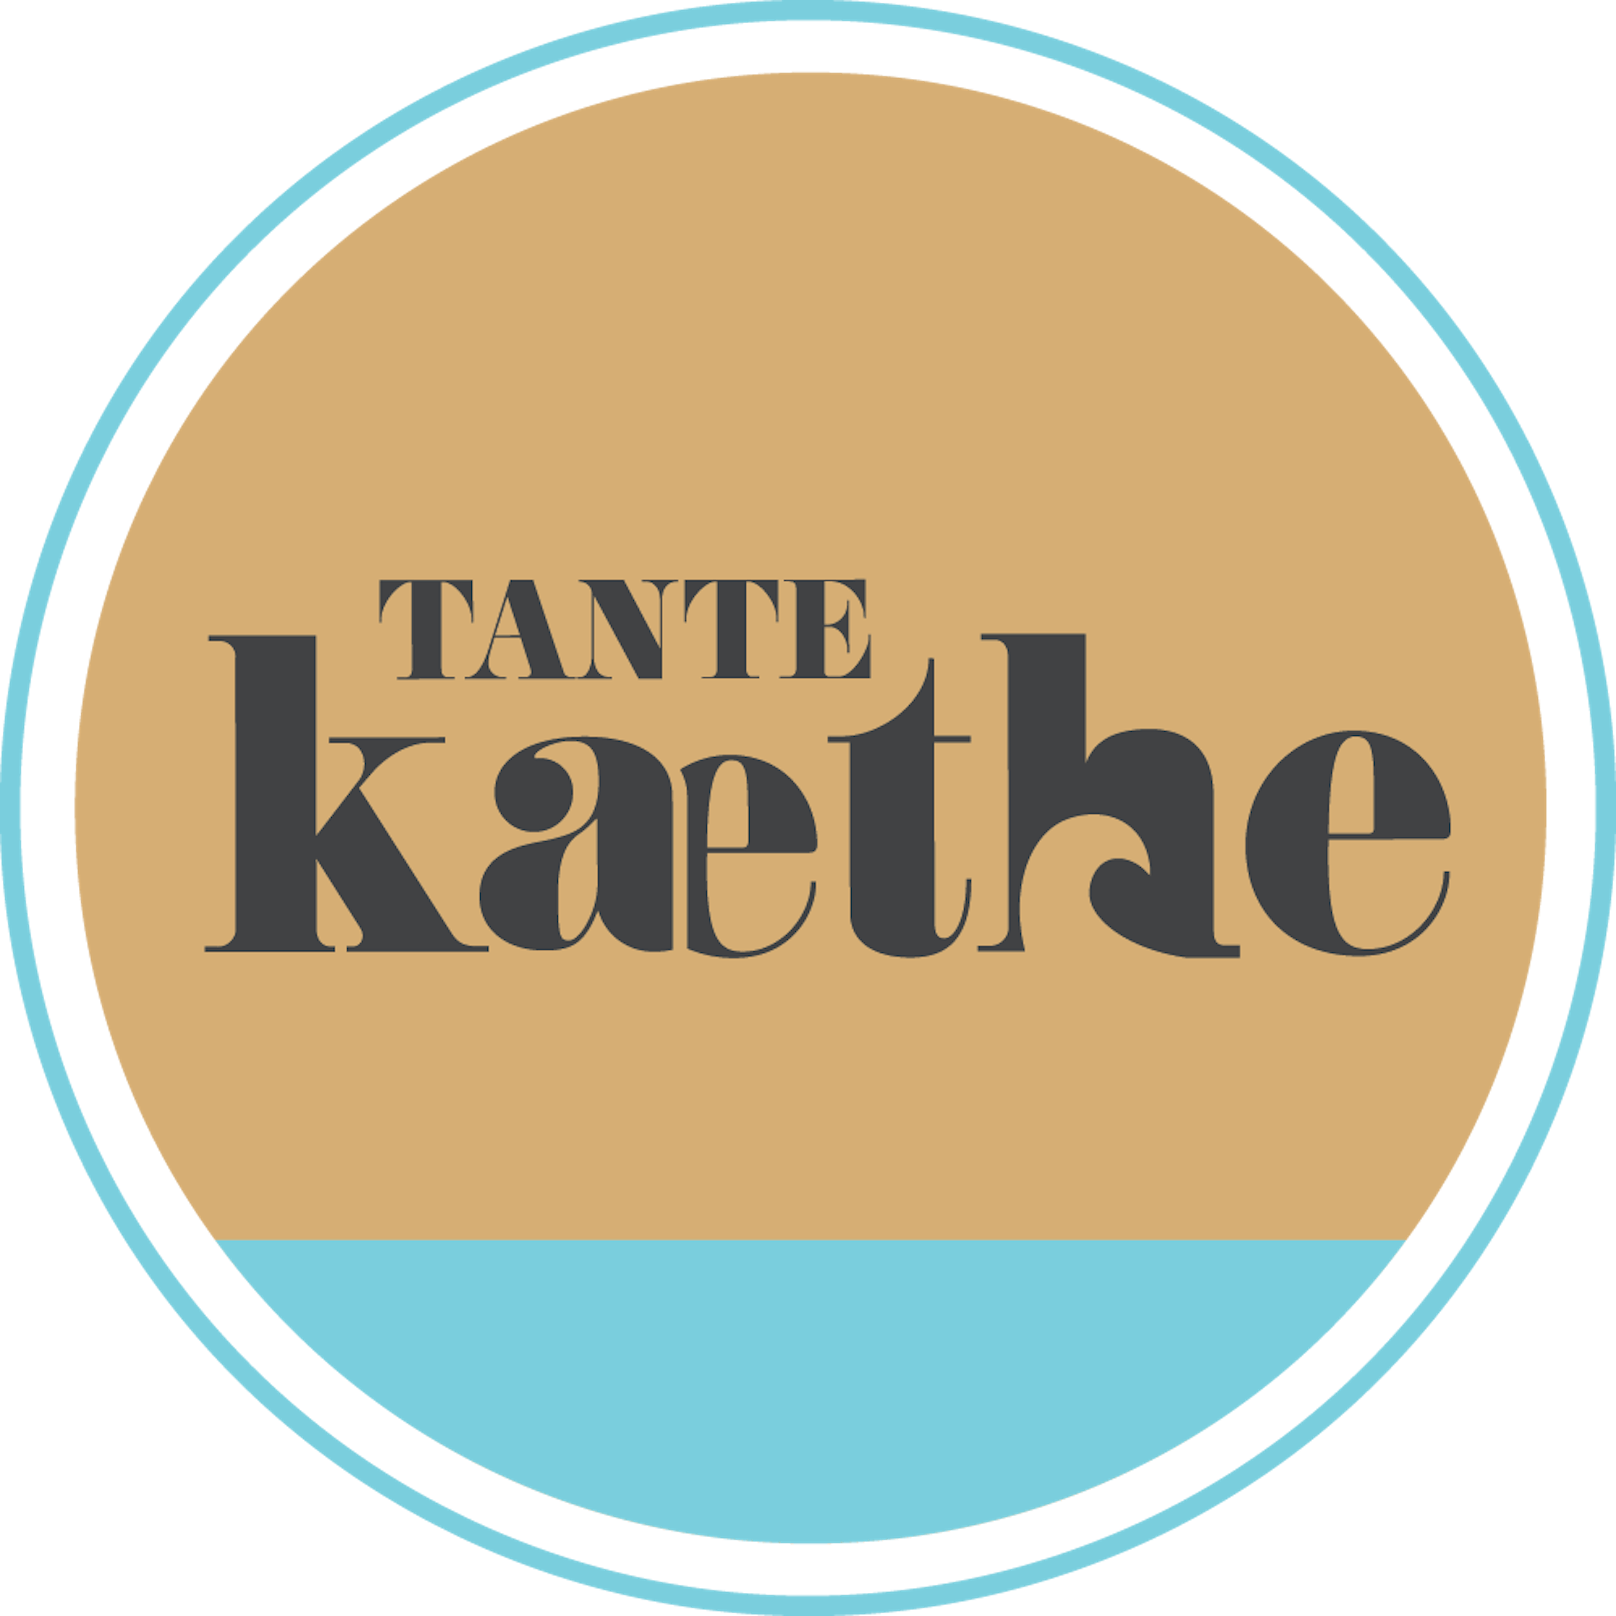 Tante Kaethe